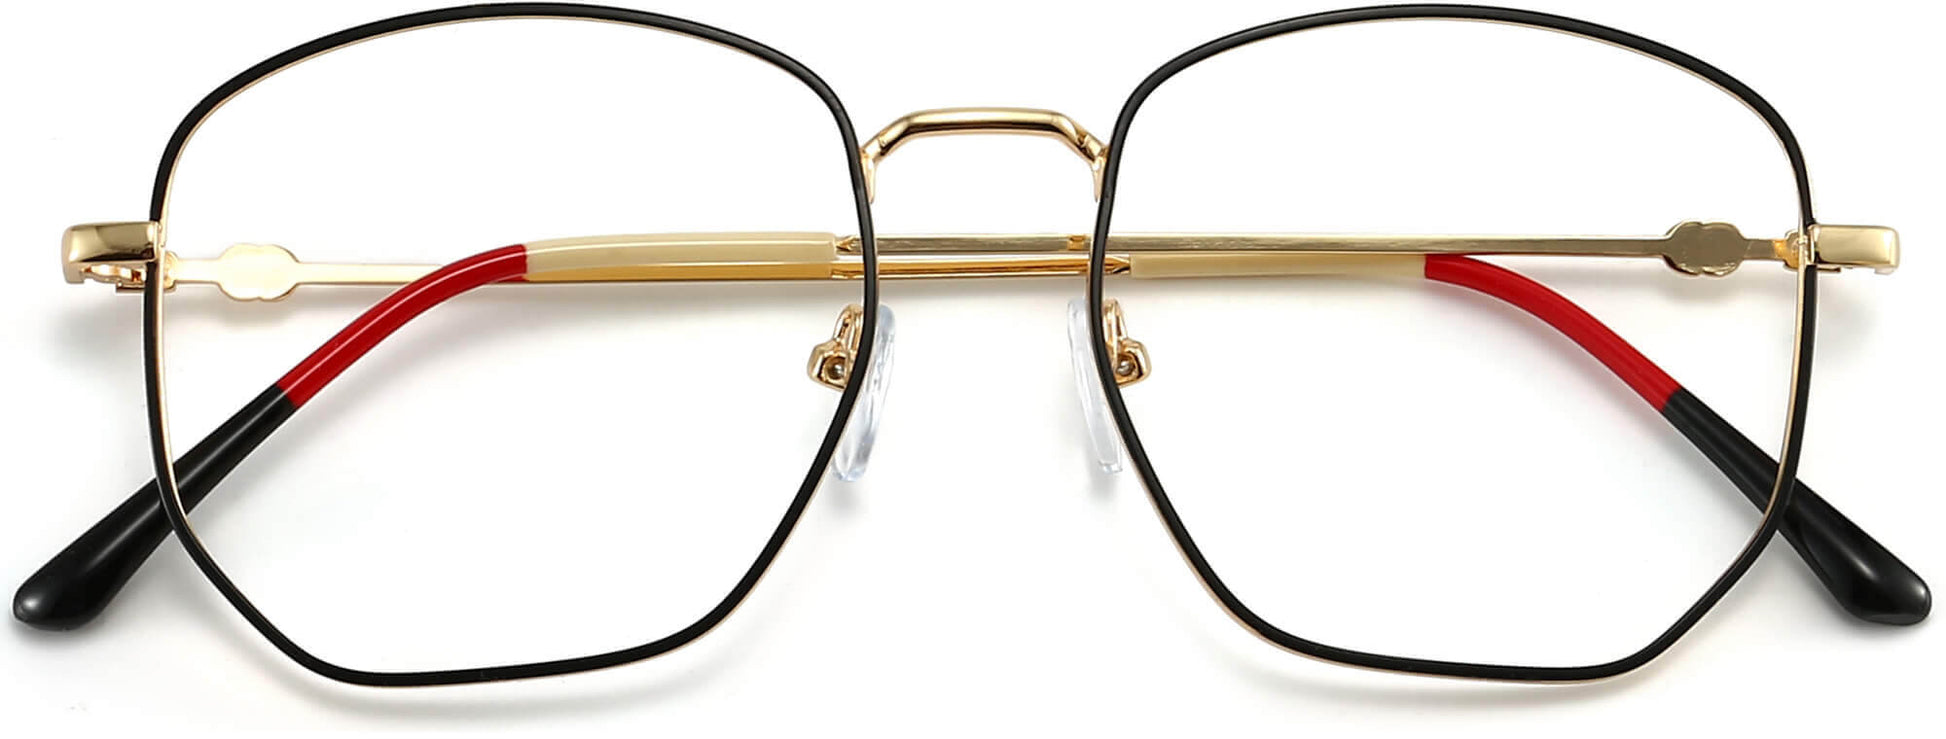 Leighton Geometric Black Eyeglasses from ANRRI, closed view